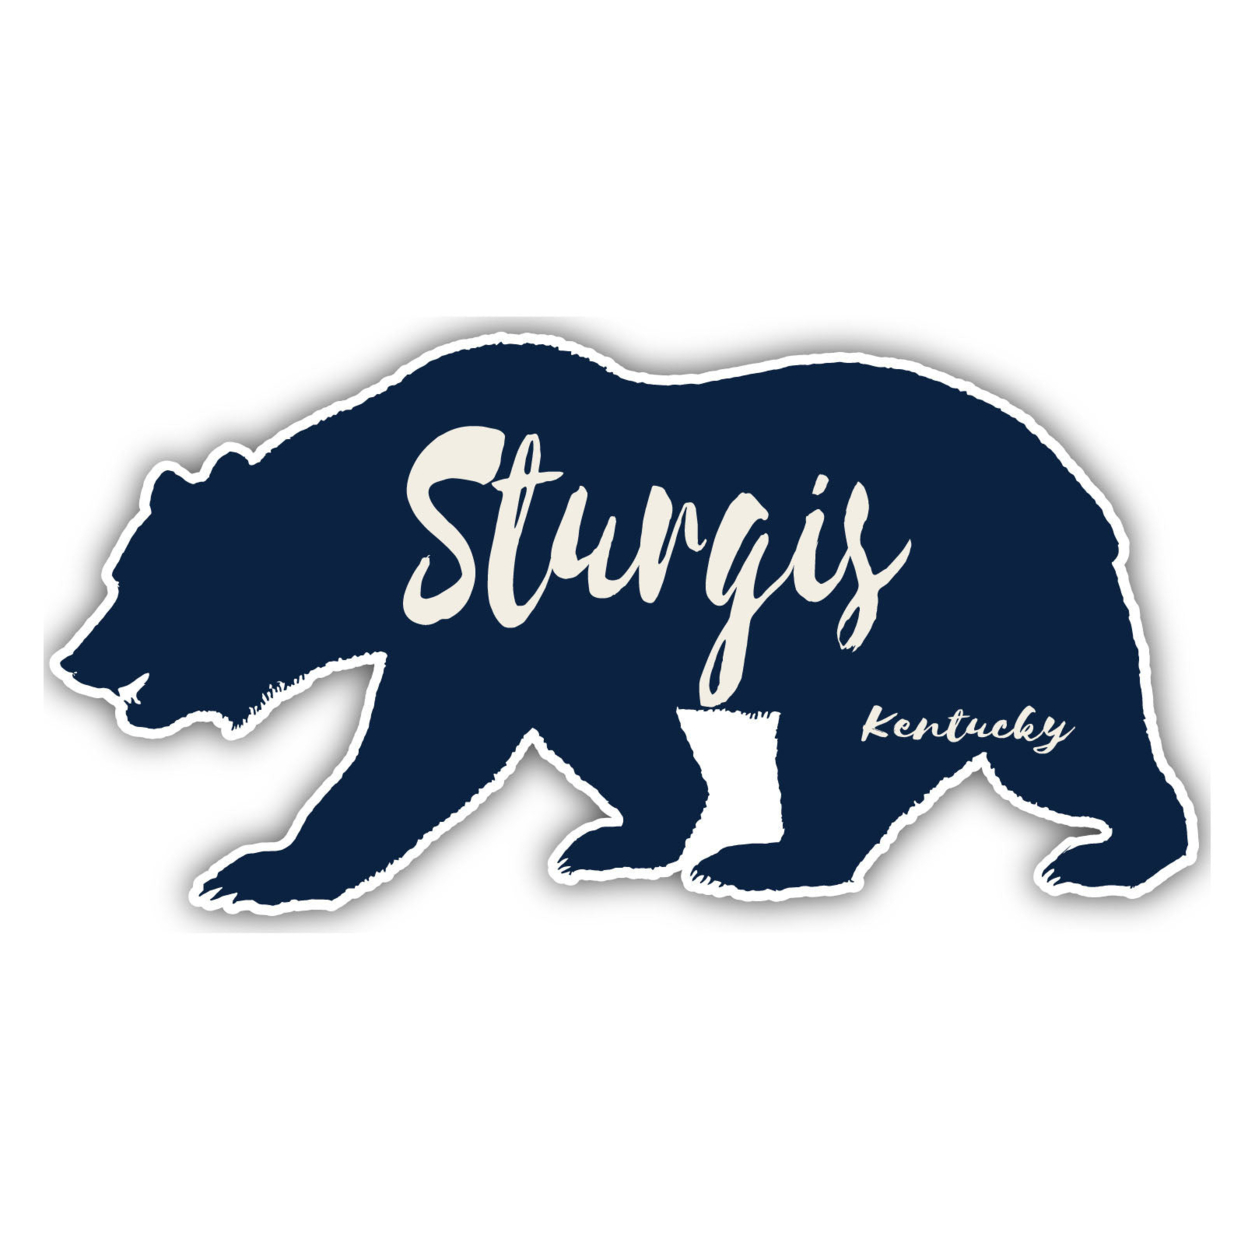 Sturgis Kentucky Souvenir Decorative Stickers (Choose Theme And Size) - Single Unit, 4-Inch, Bear